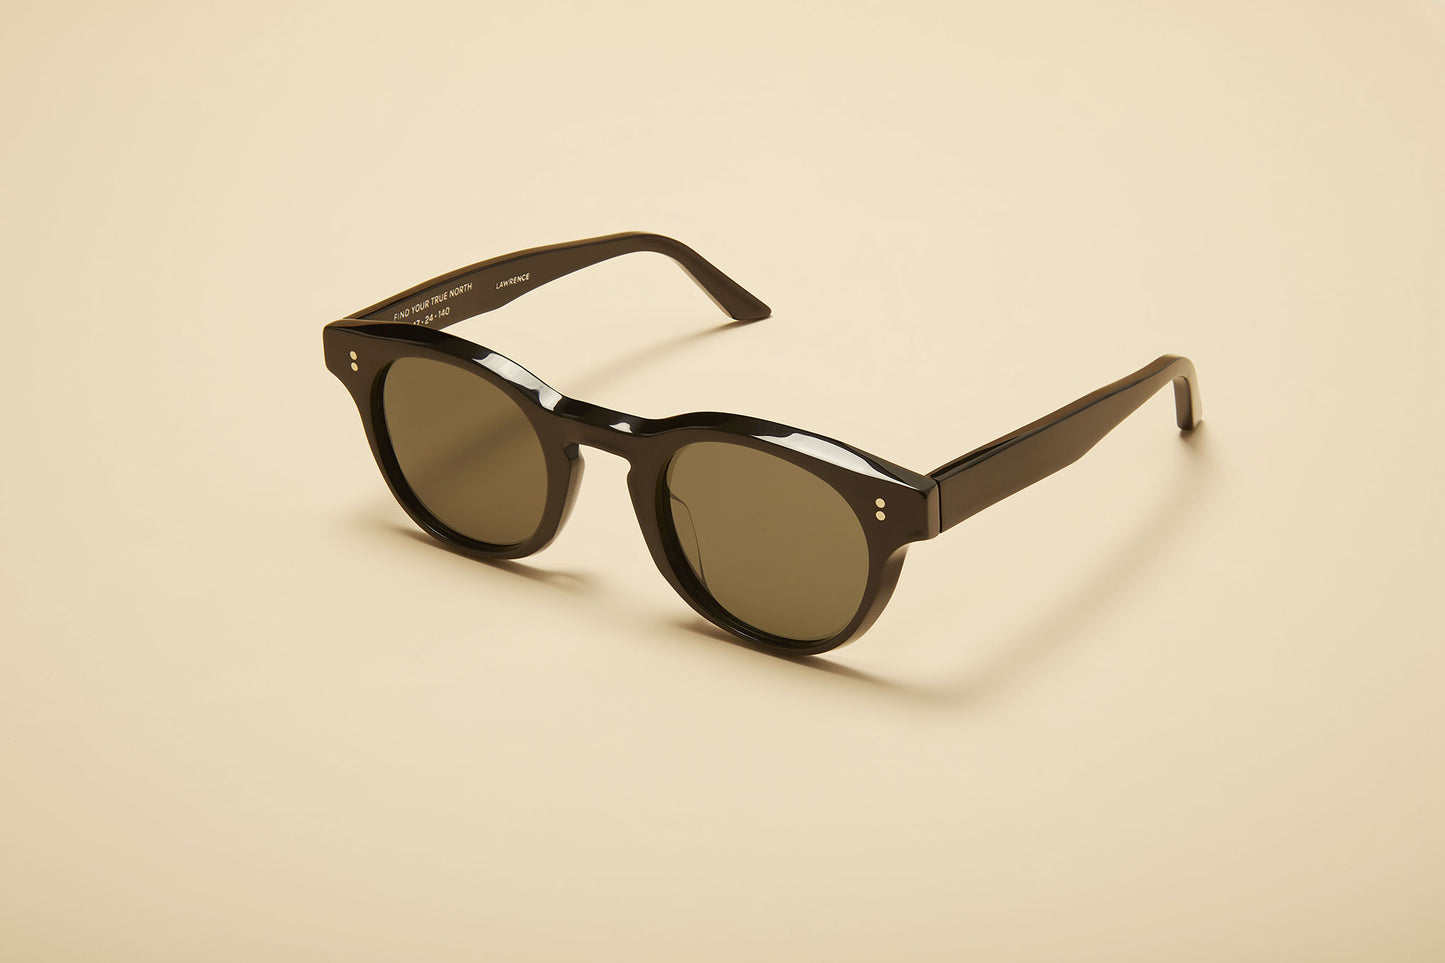 Black round sunglasses side view